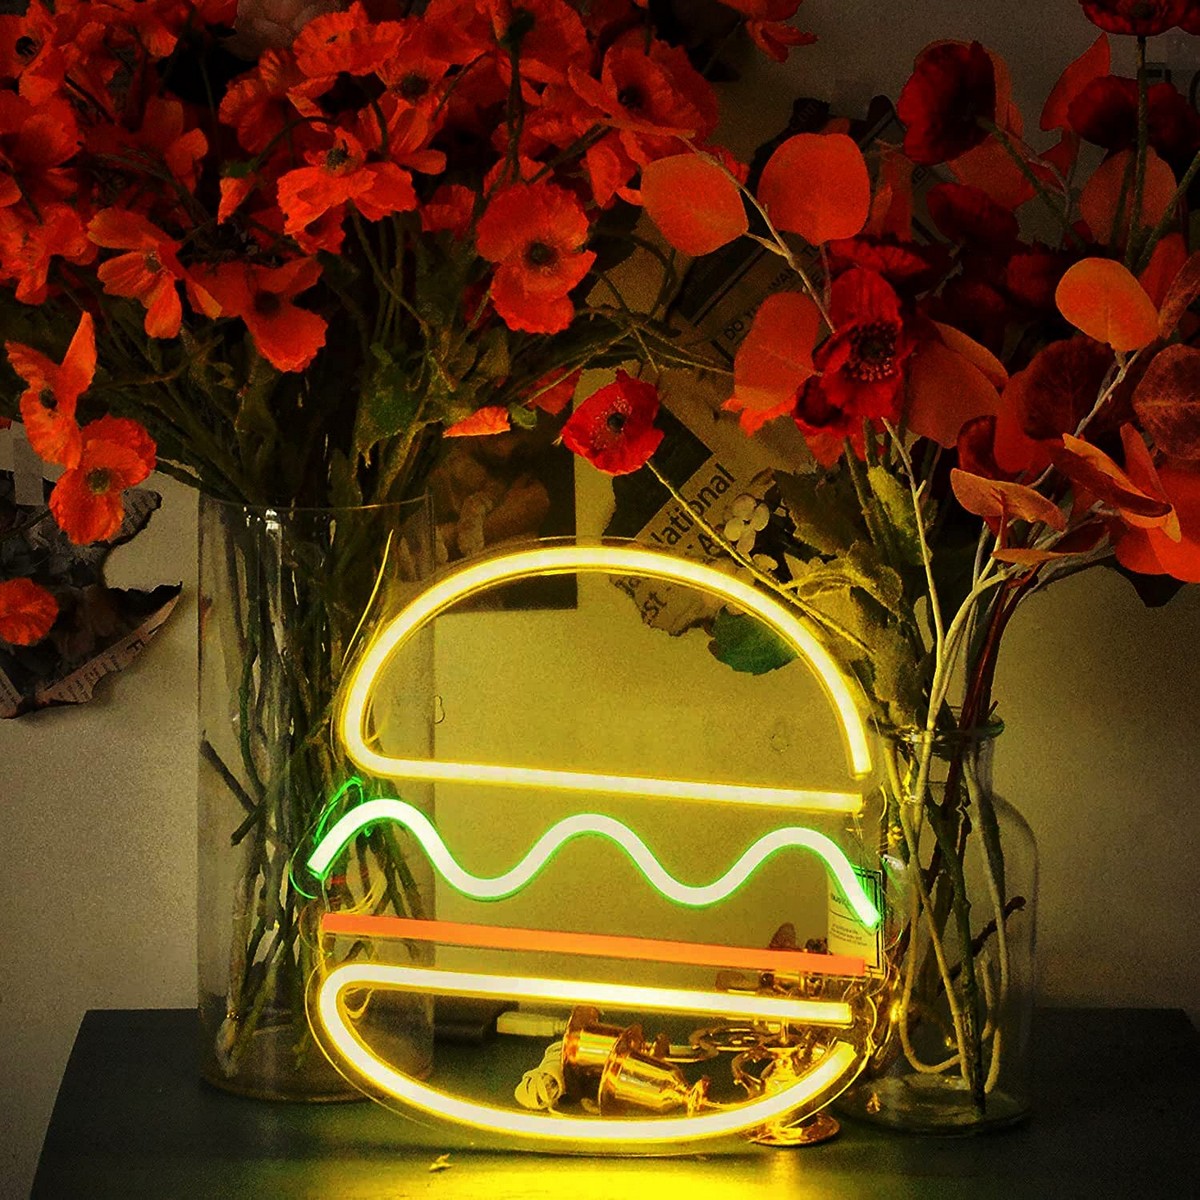 panneau led de restaurant néon logo lumineux - hamburger hamburger